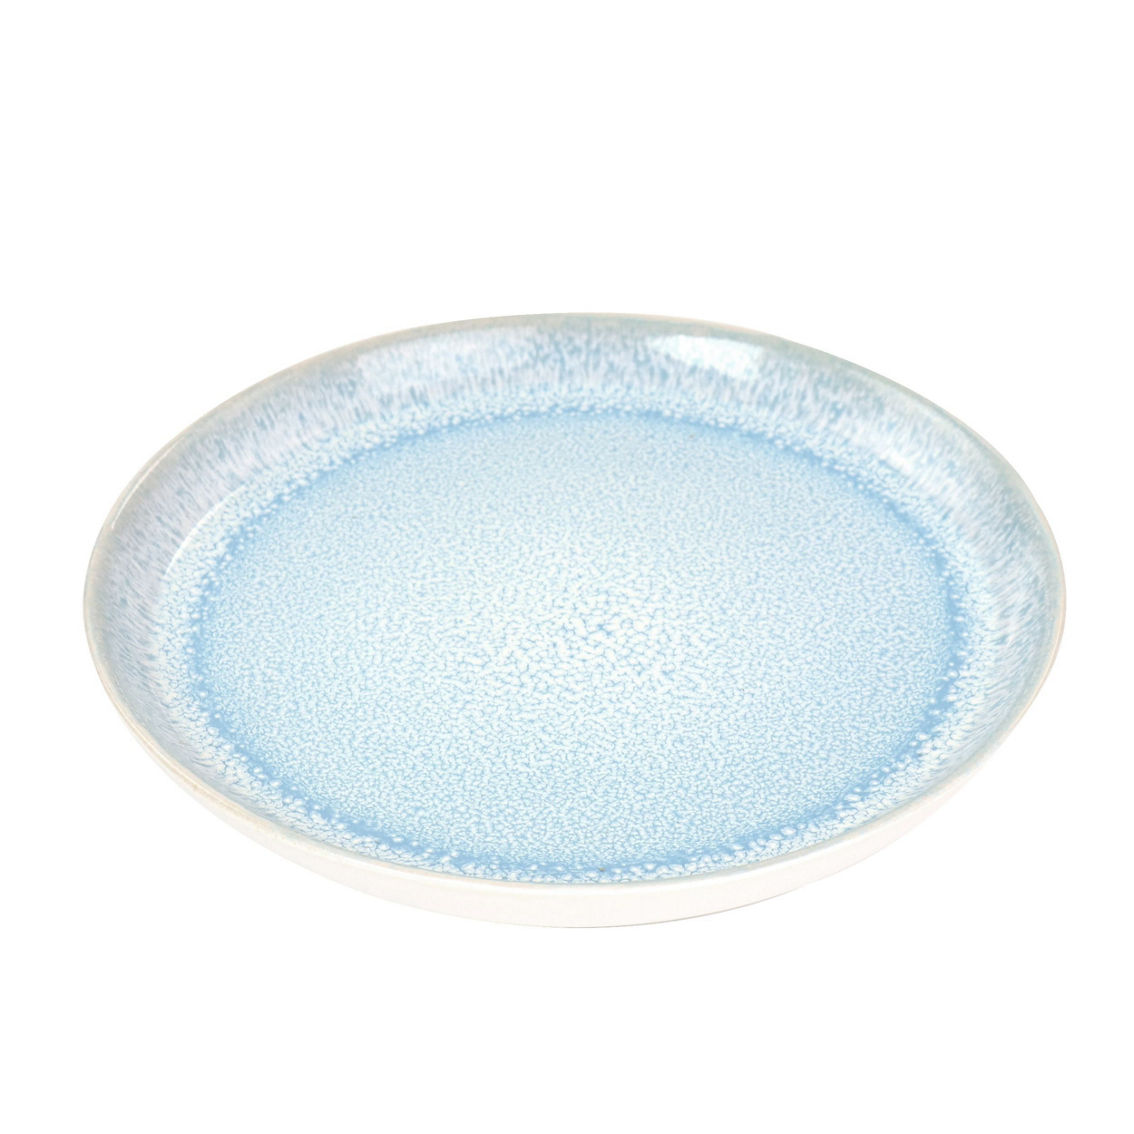 Elama Mocha 16 Piece Stoneware Dinnerware Set in Blue - Image 5 of 5